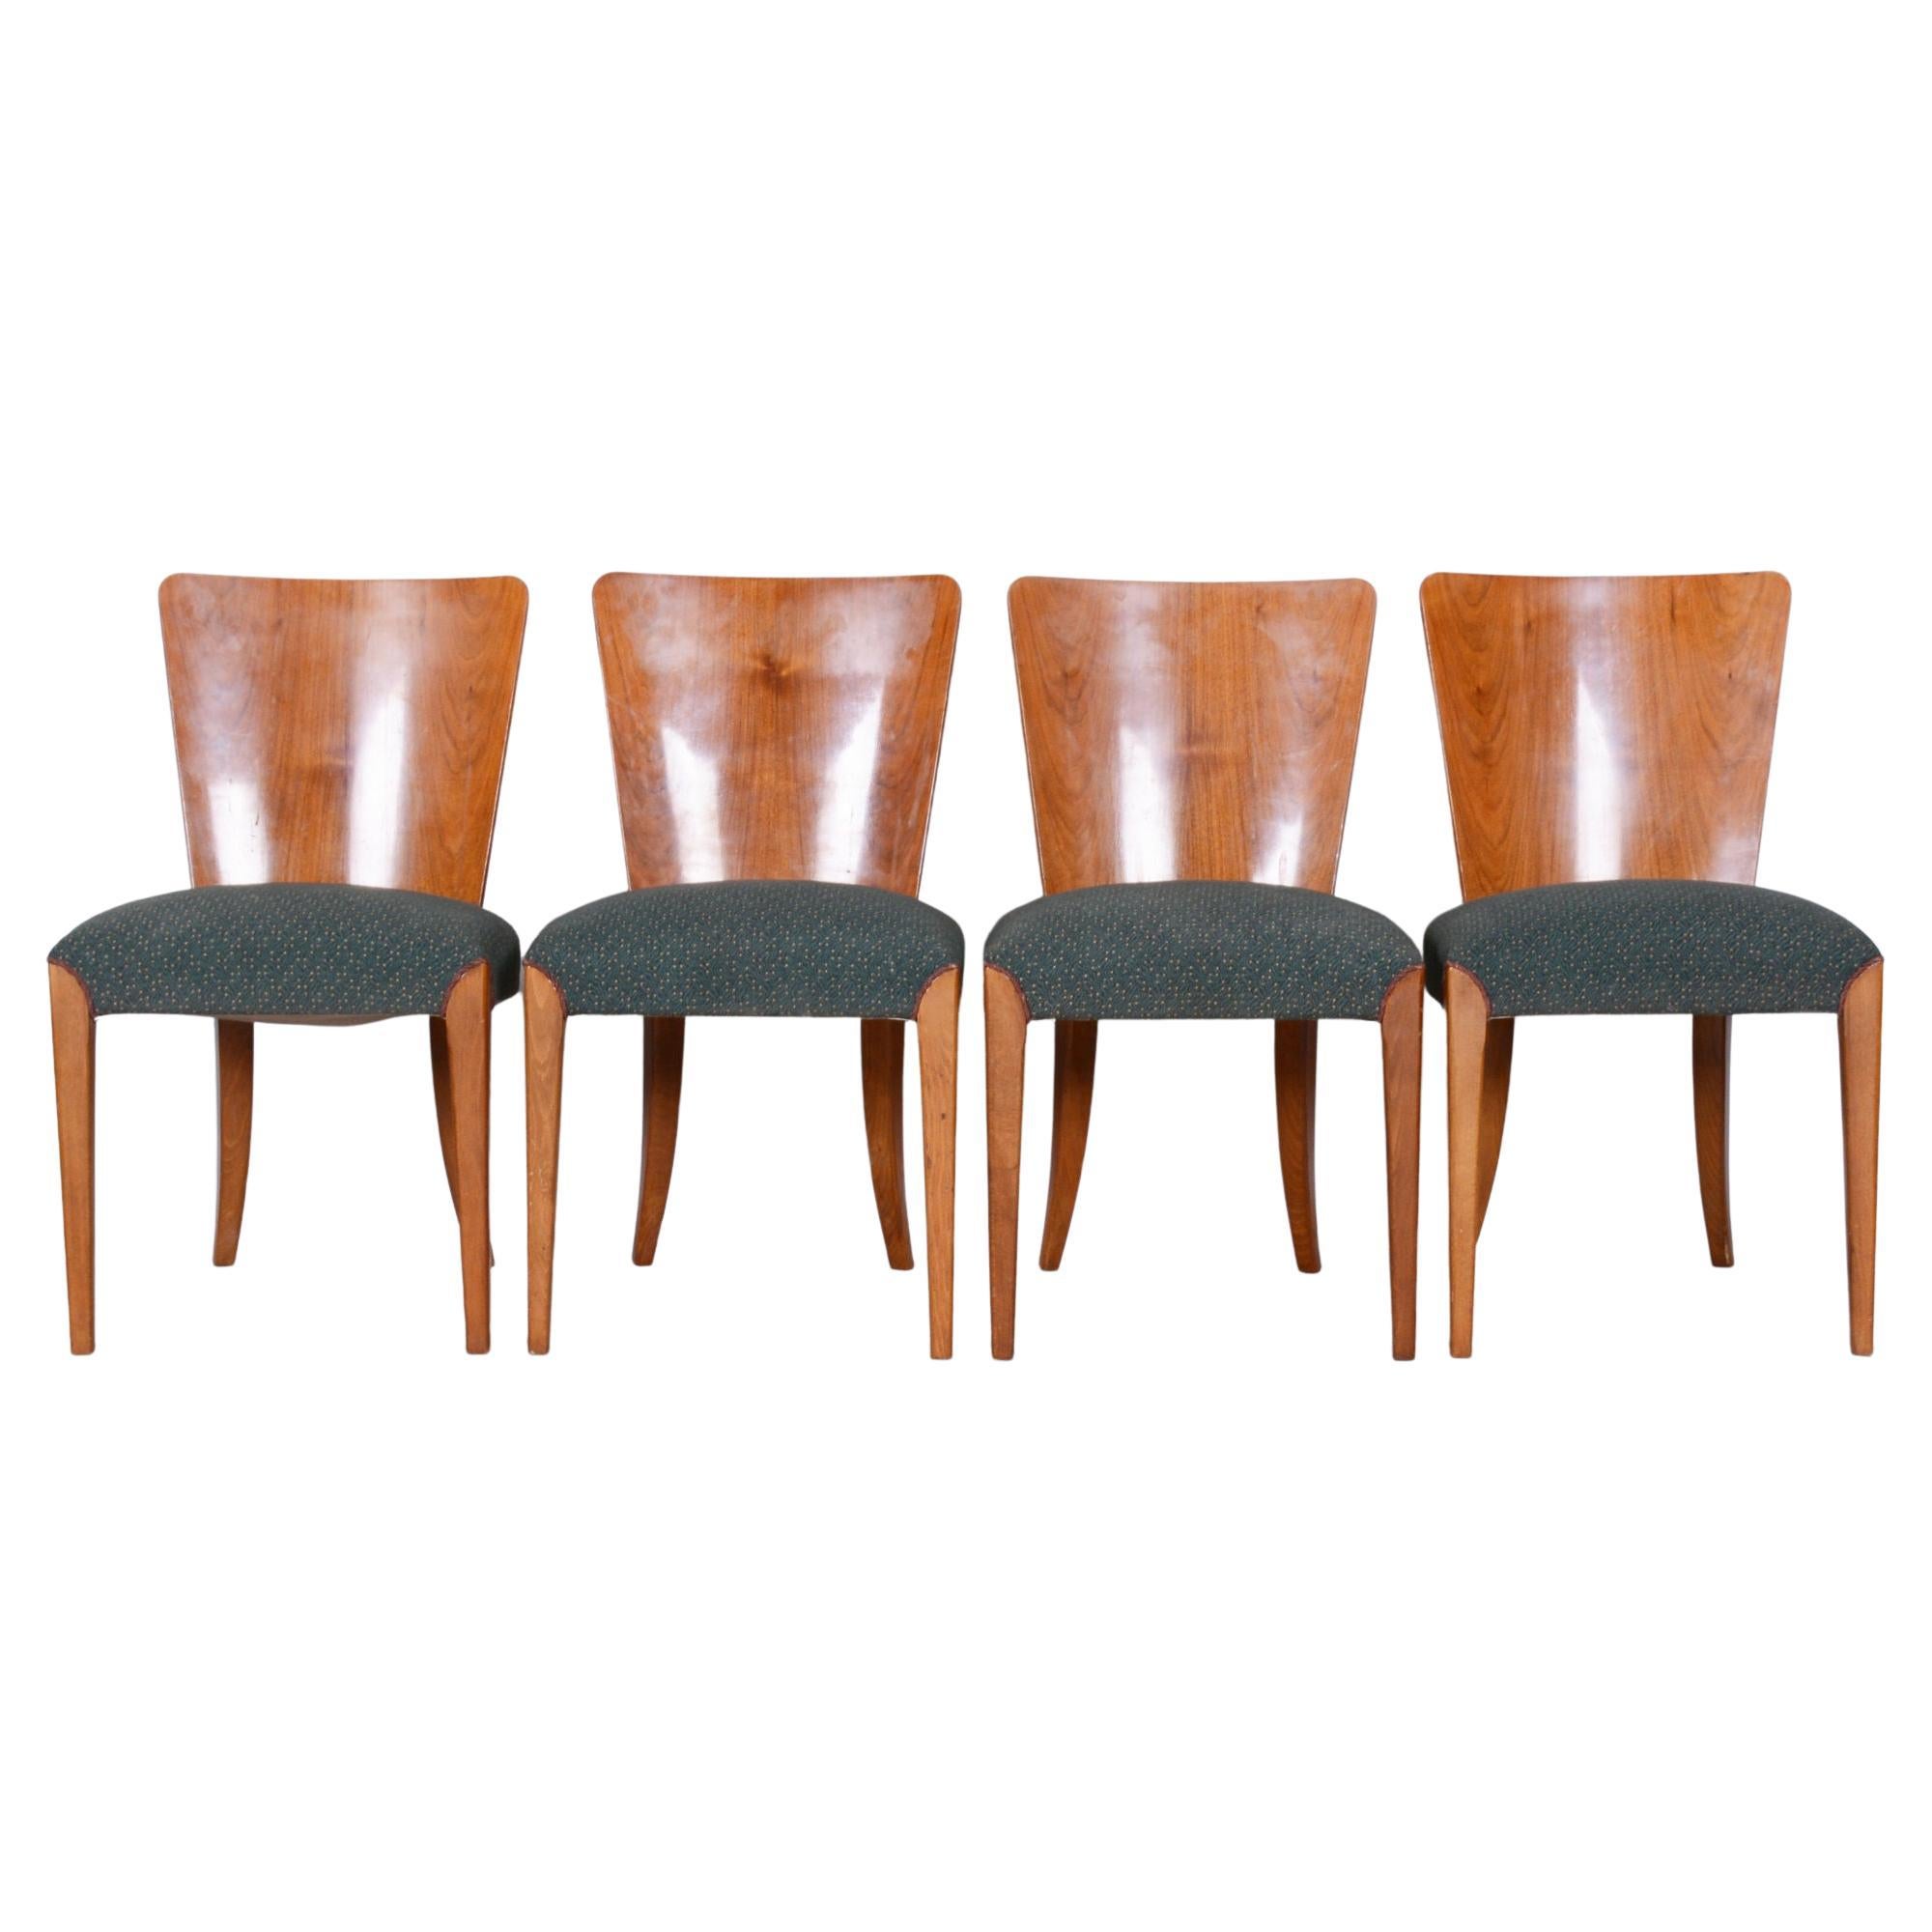 Set of Four Original ArtDeco Chairs, Halabala, UP Zavody, Beech, Czechia, 1940s